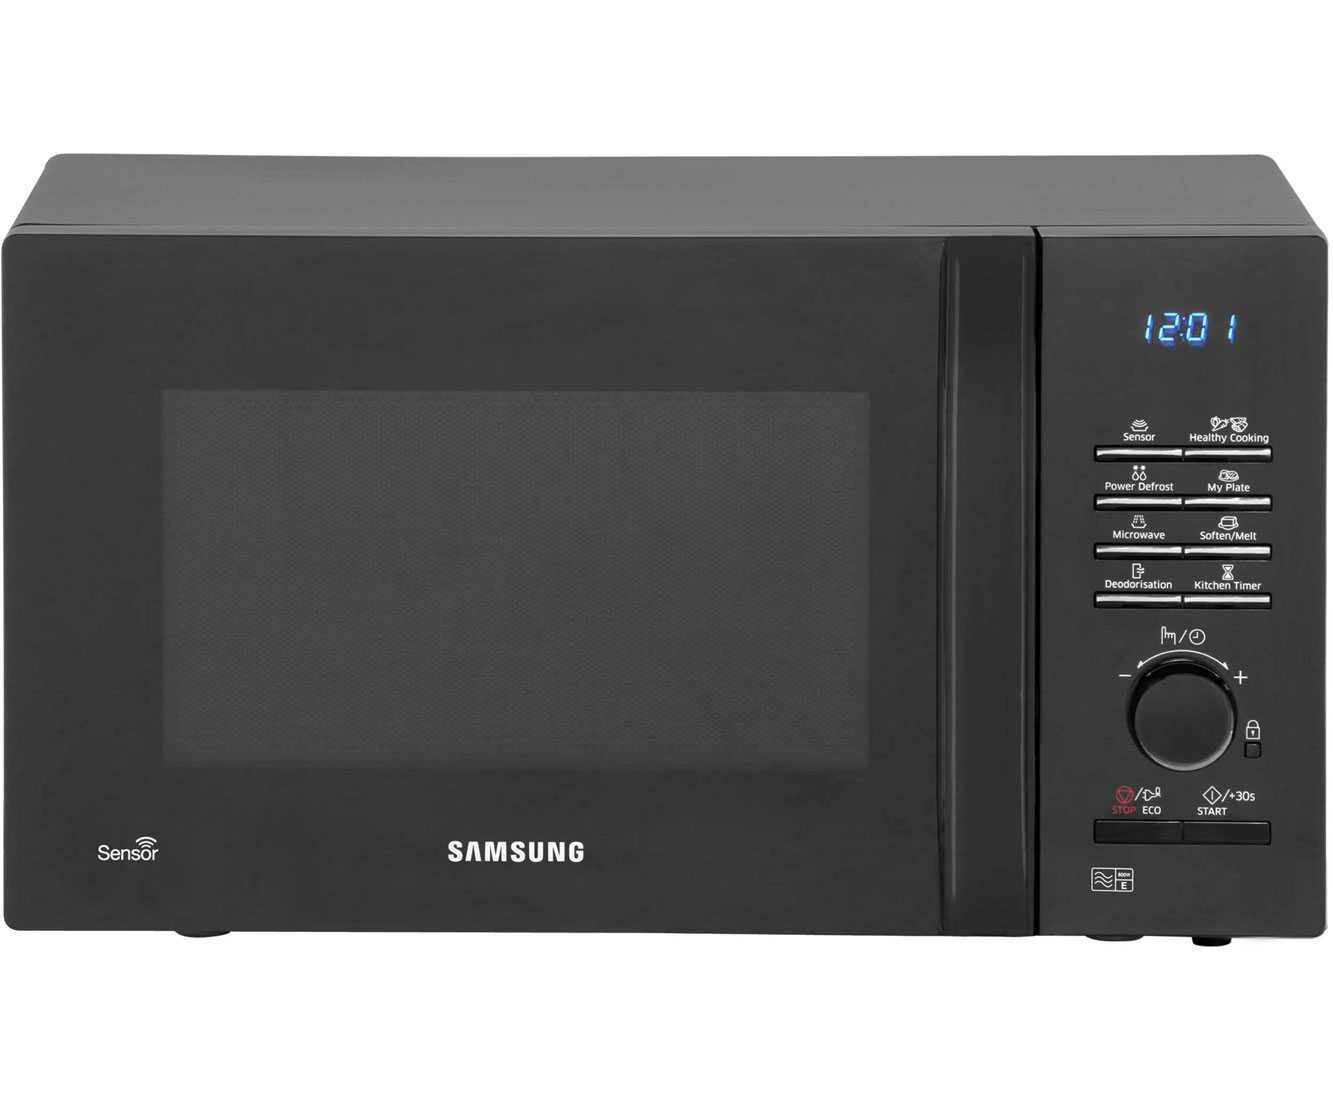 MS23H3125AK_BK | Samsung Microwave Oven | 23L | ao.com